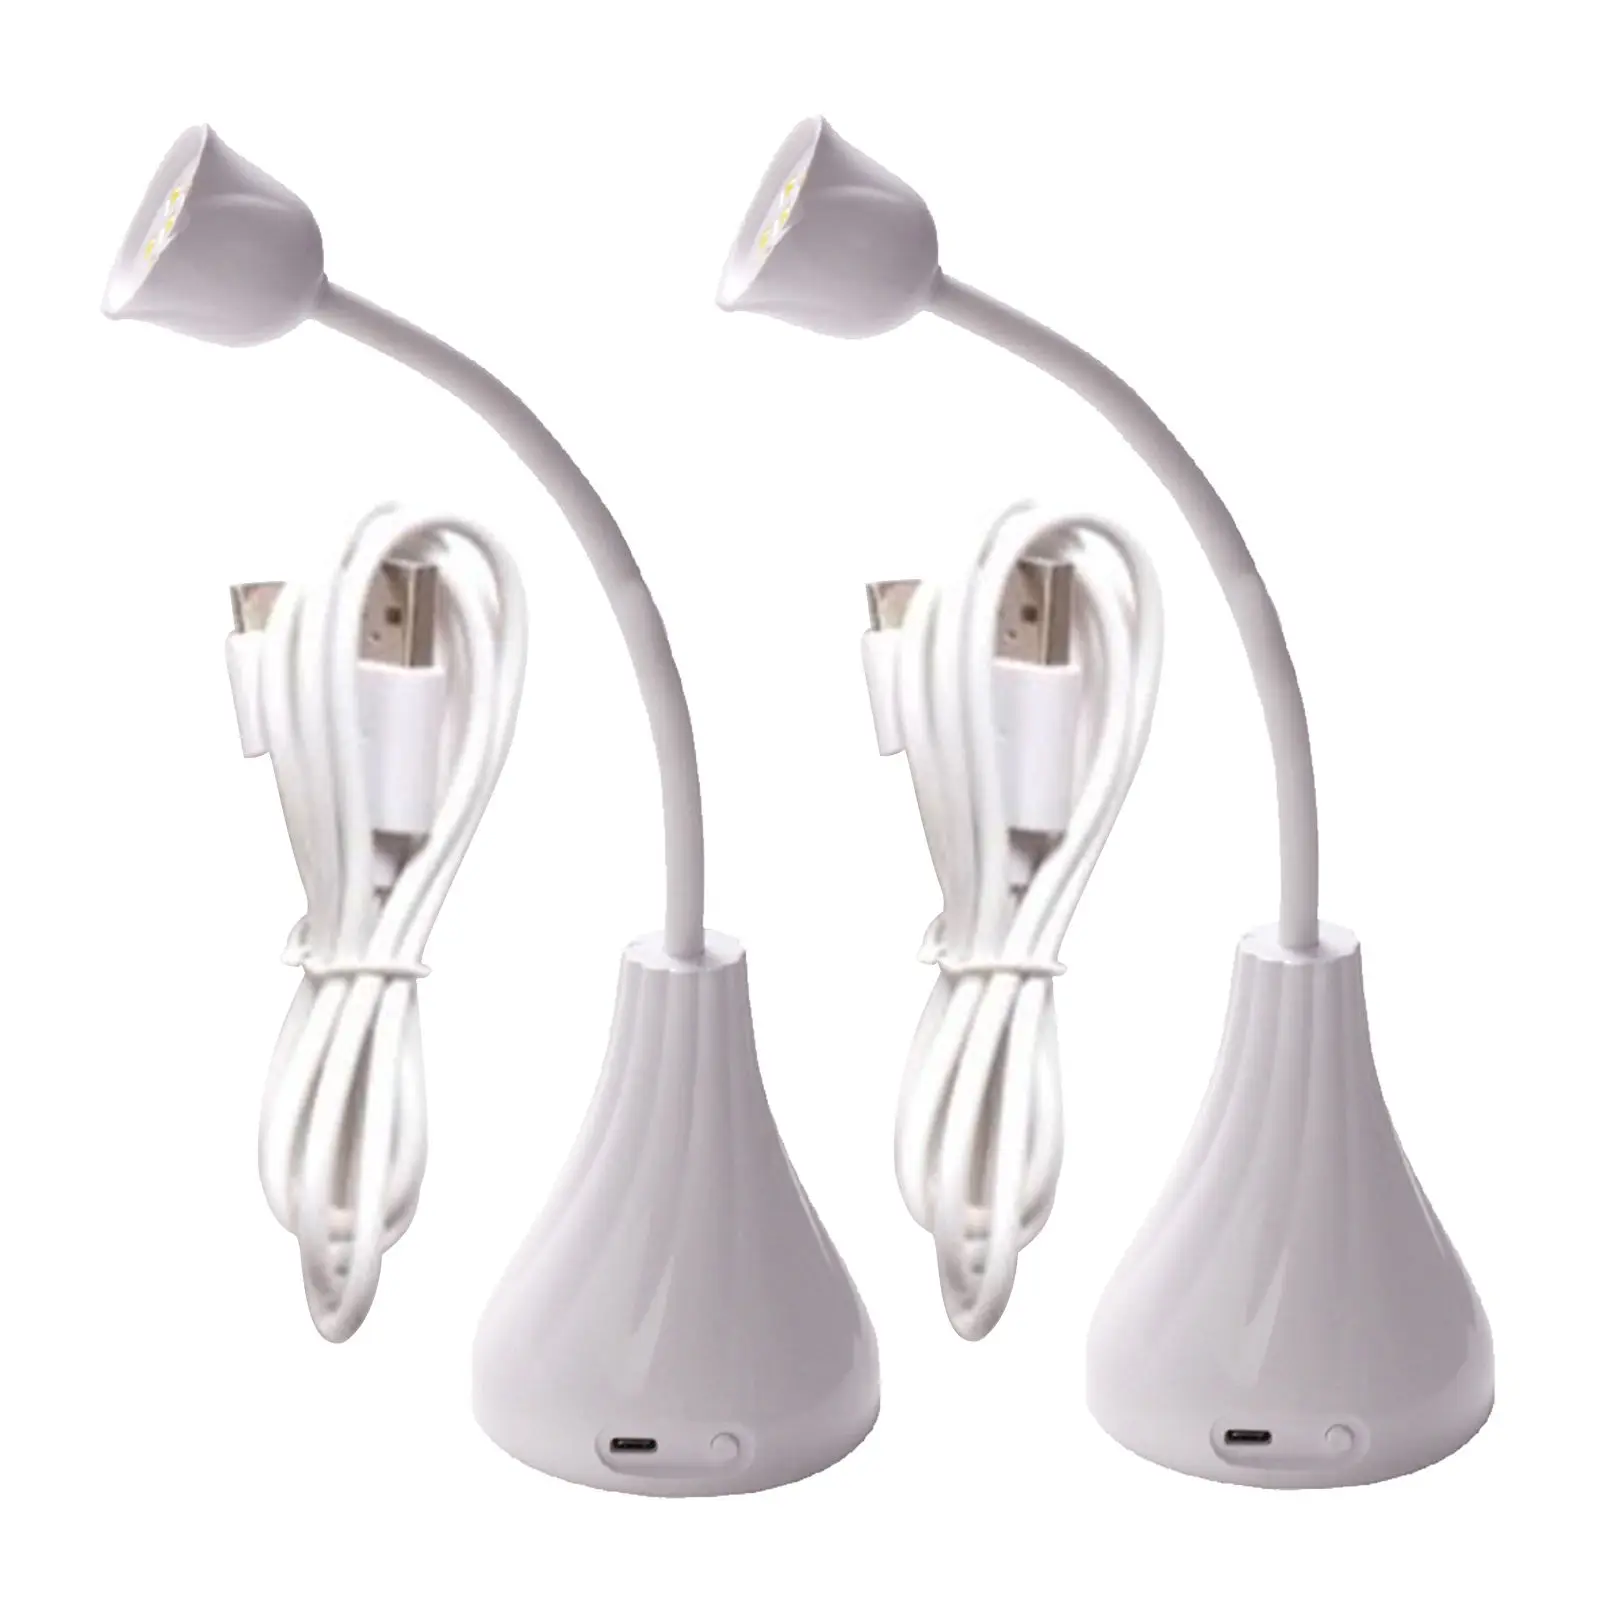 USB LED Nail Lamp Light Rotation Nail Dryer for Nail Art ,Salon ,Girls Women, White